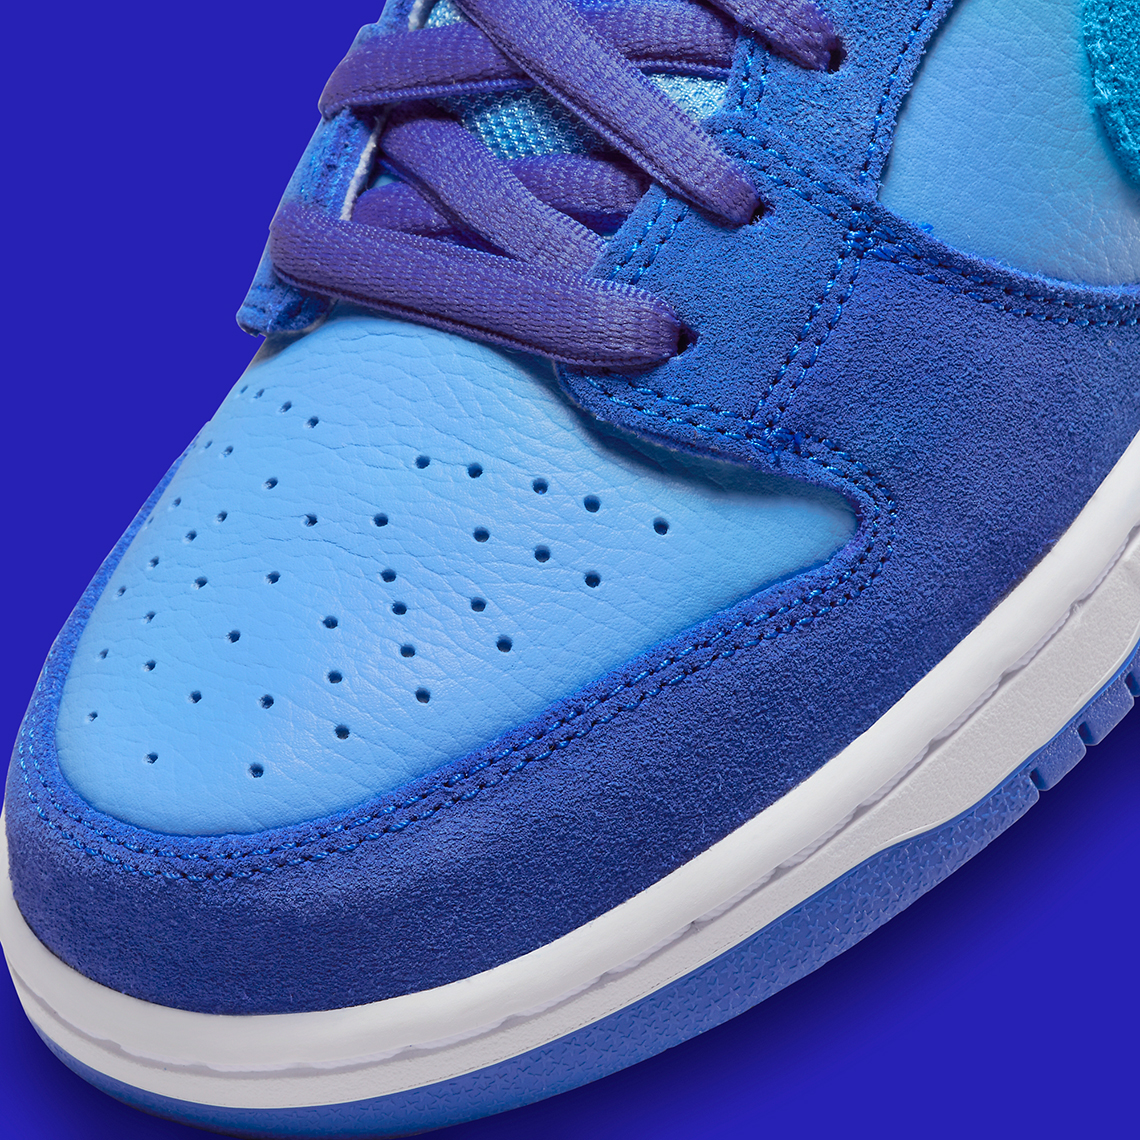 Nike SB dunk low blue Dunk Low "Blue Raspberry" DM0807-400 | SneakerNews.com